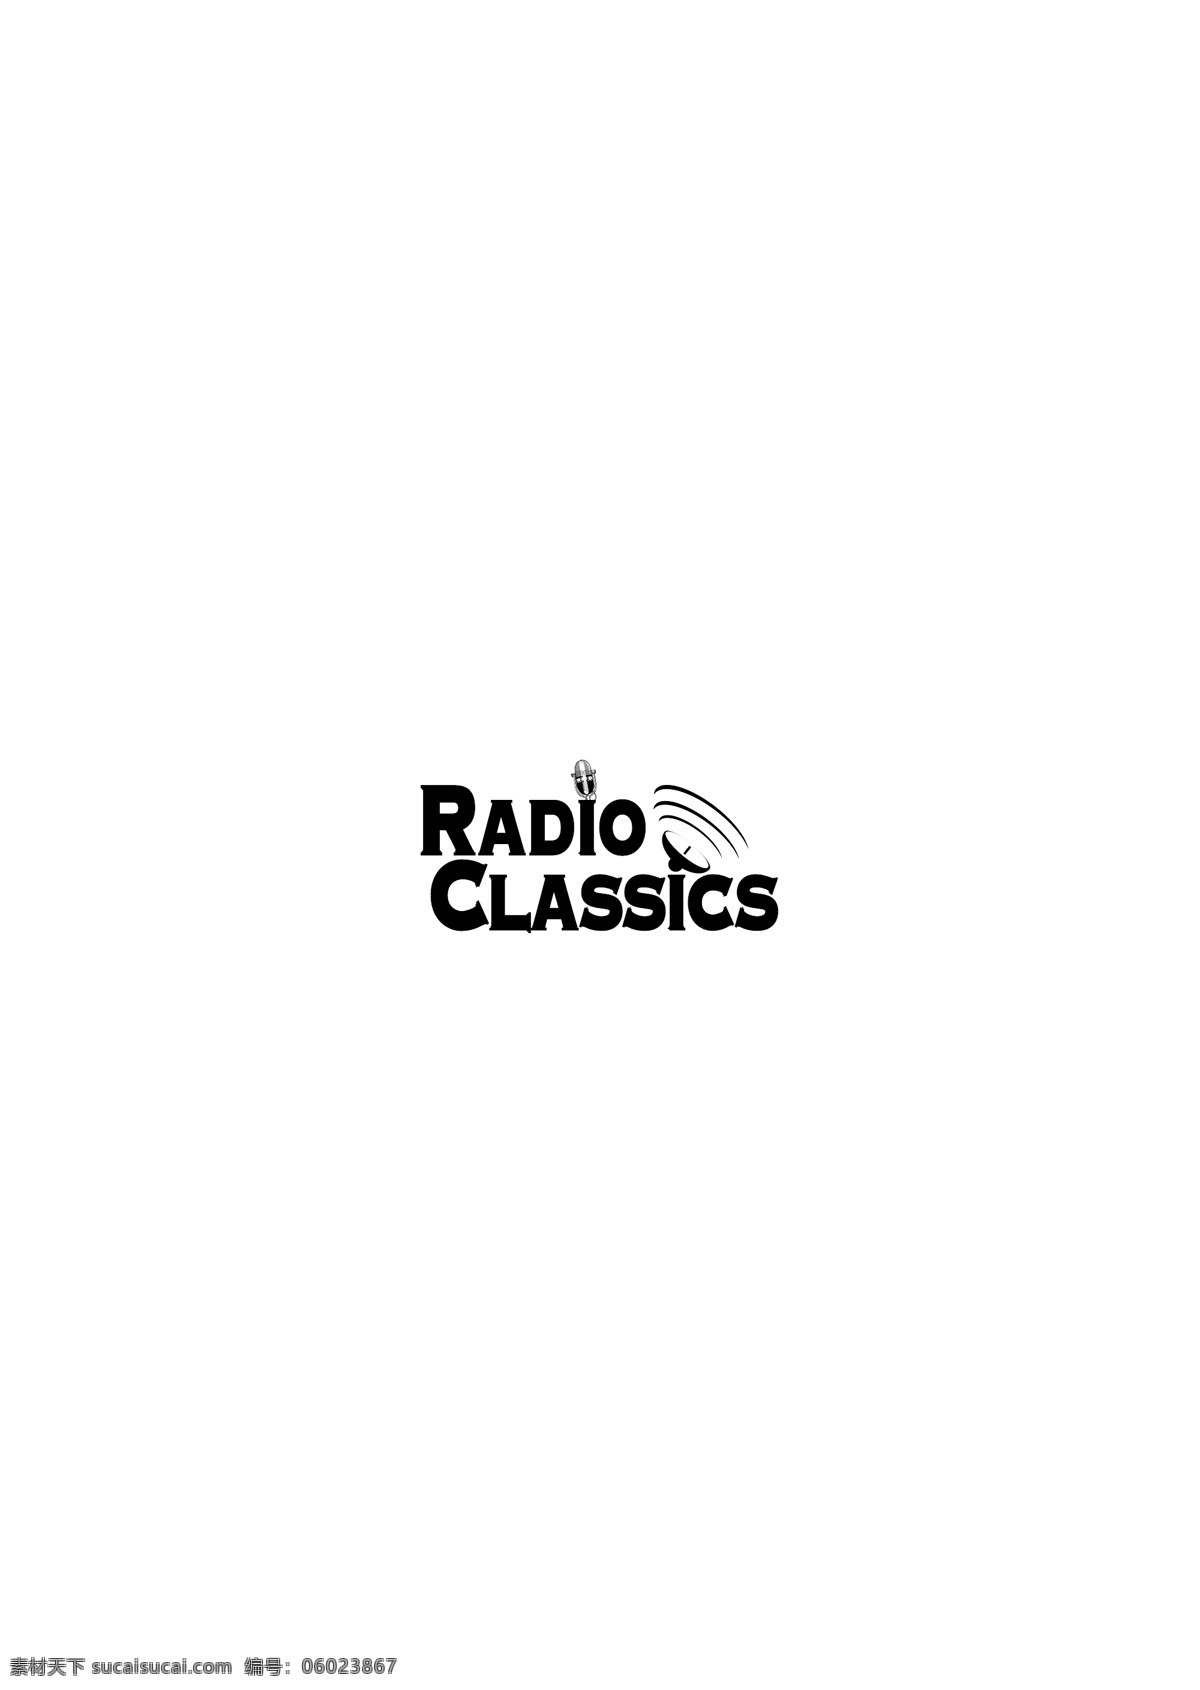 radio classics logo 设计欣赏 标志设计 欣赏 矢量下载 网页矢量 商业矢量 logo大全 红色